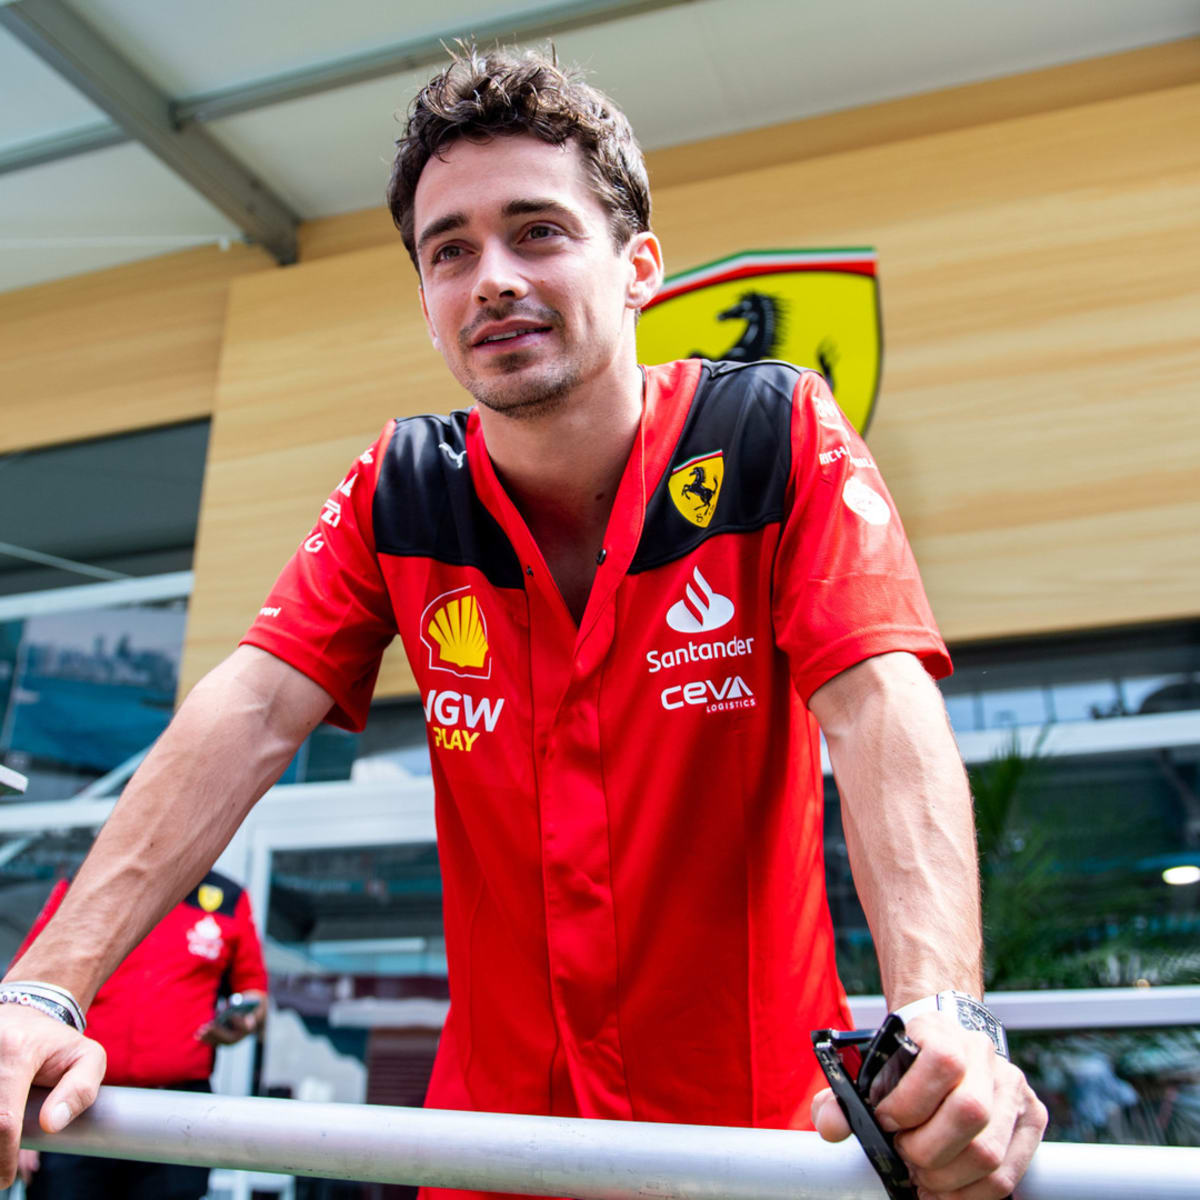 Scuderia Ferrari and Charles Leclerc moving forward together